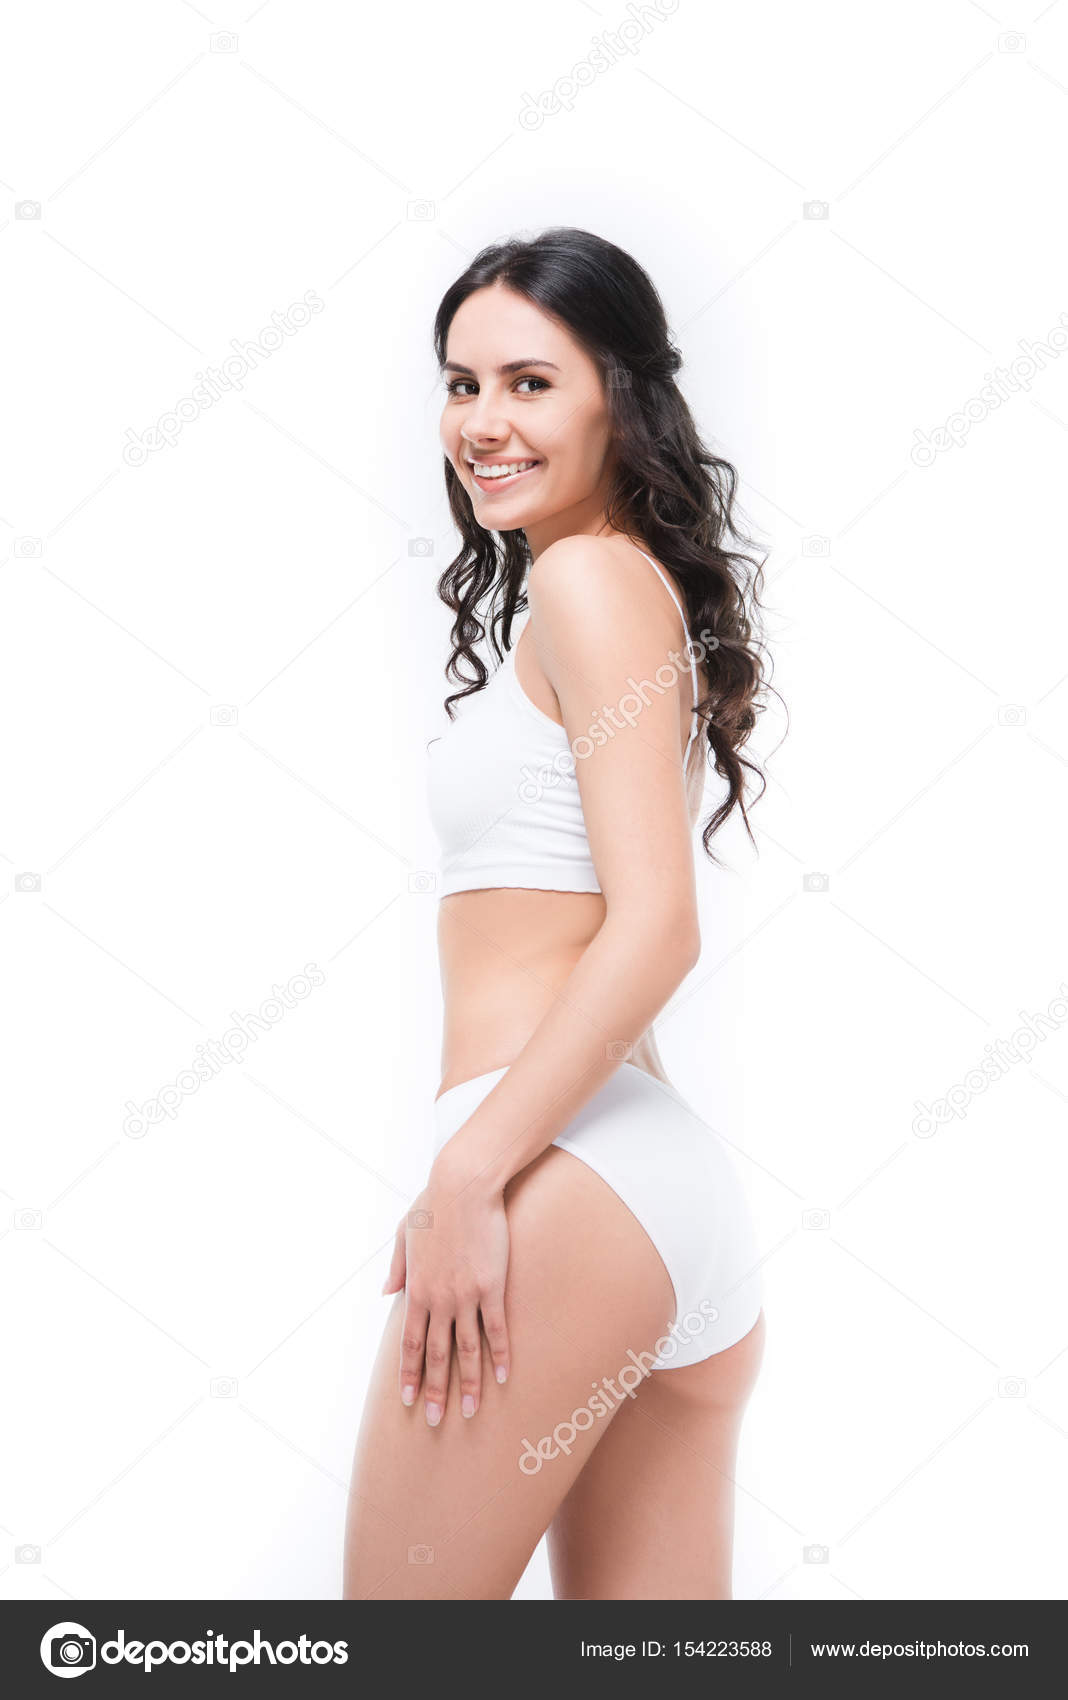 Women Posing Underwear White Background: Over 107,183 Royalty-Free